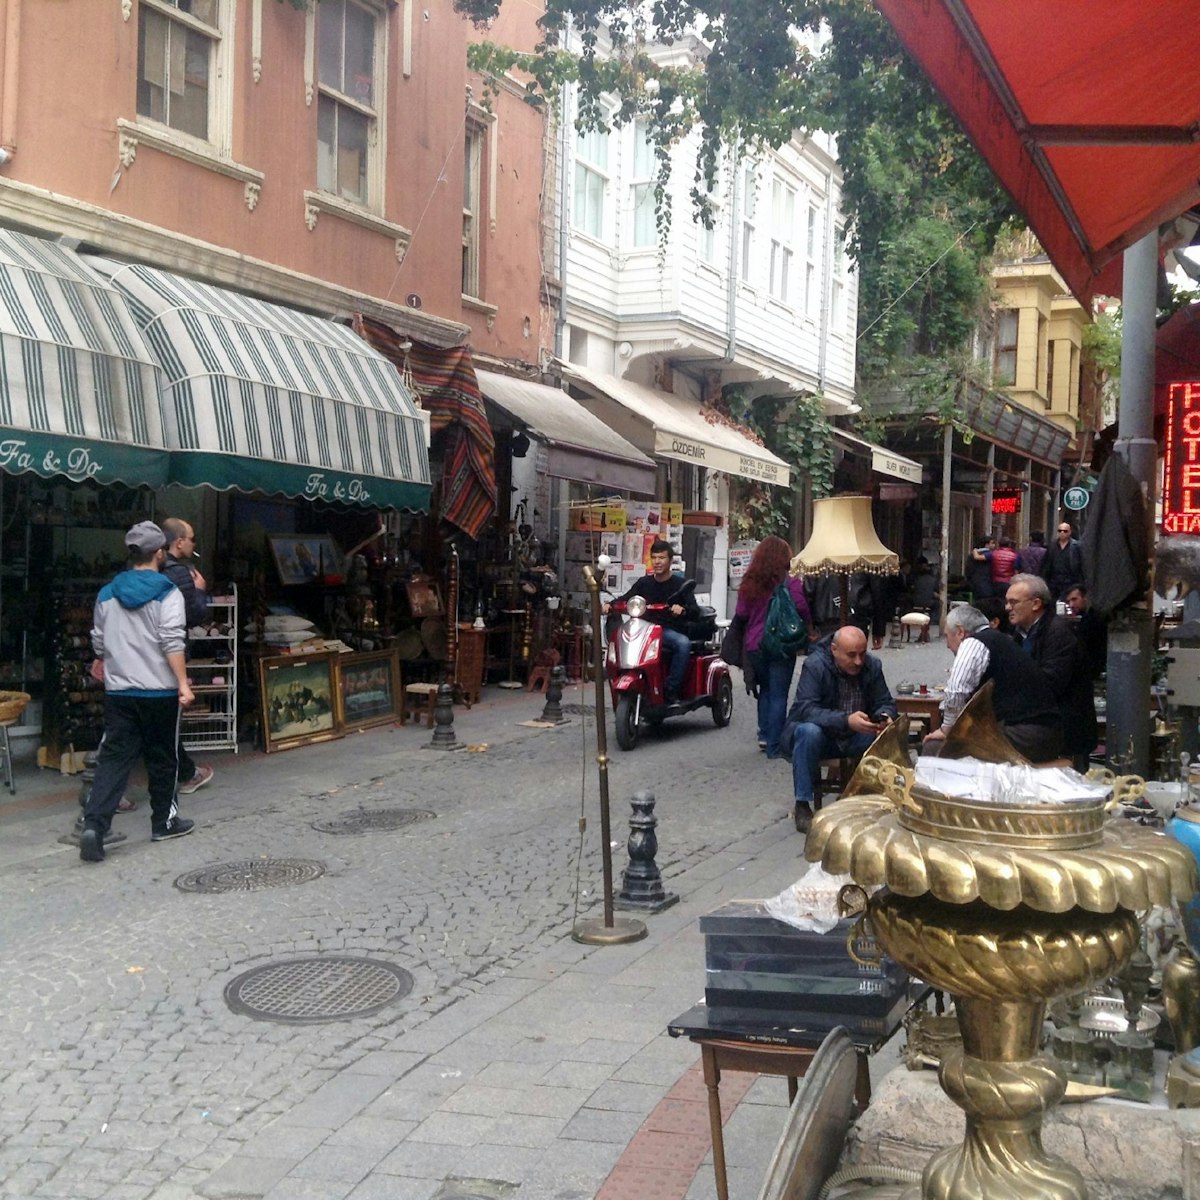 Tellalzade Sokak in Kadıköy, better known as Antikacılar Sokağı (Antique Dealers Street)